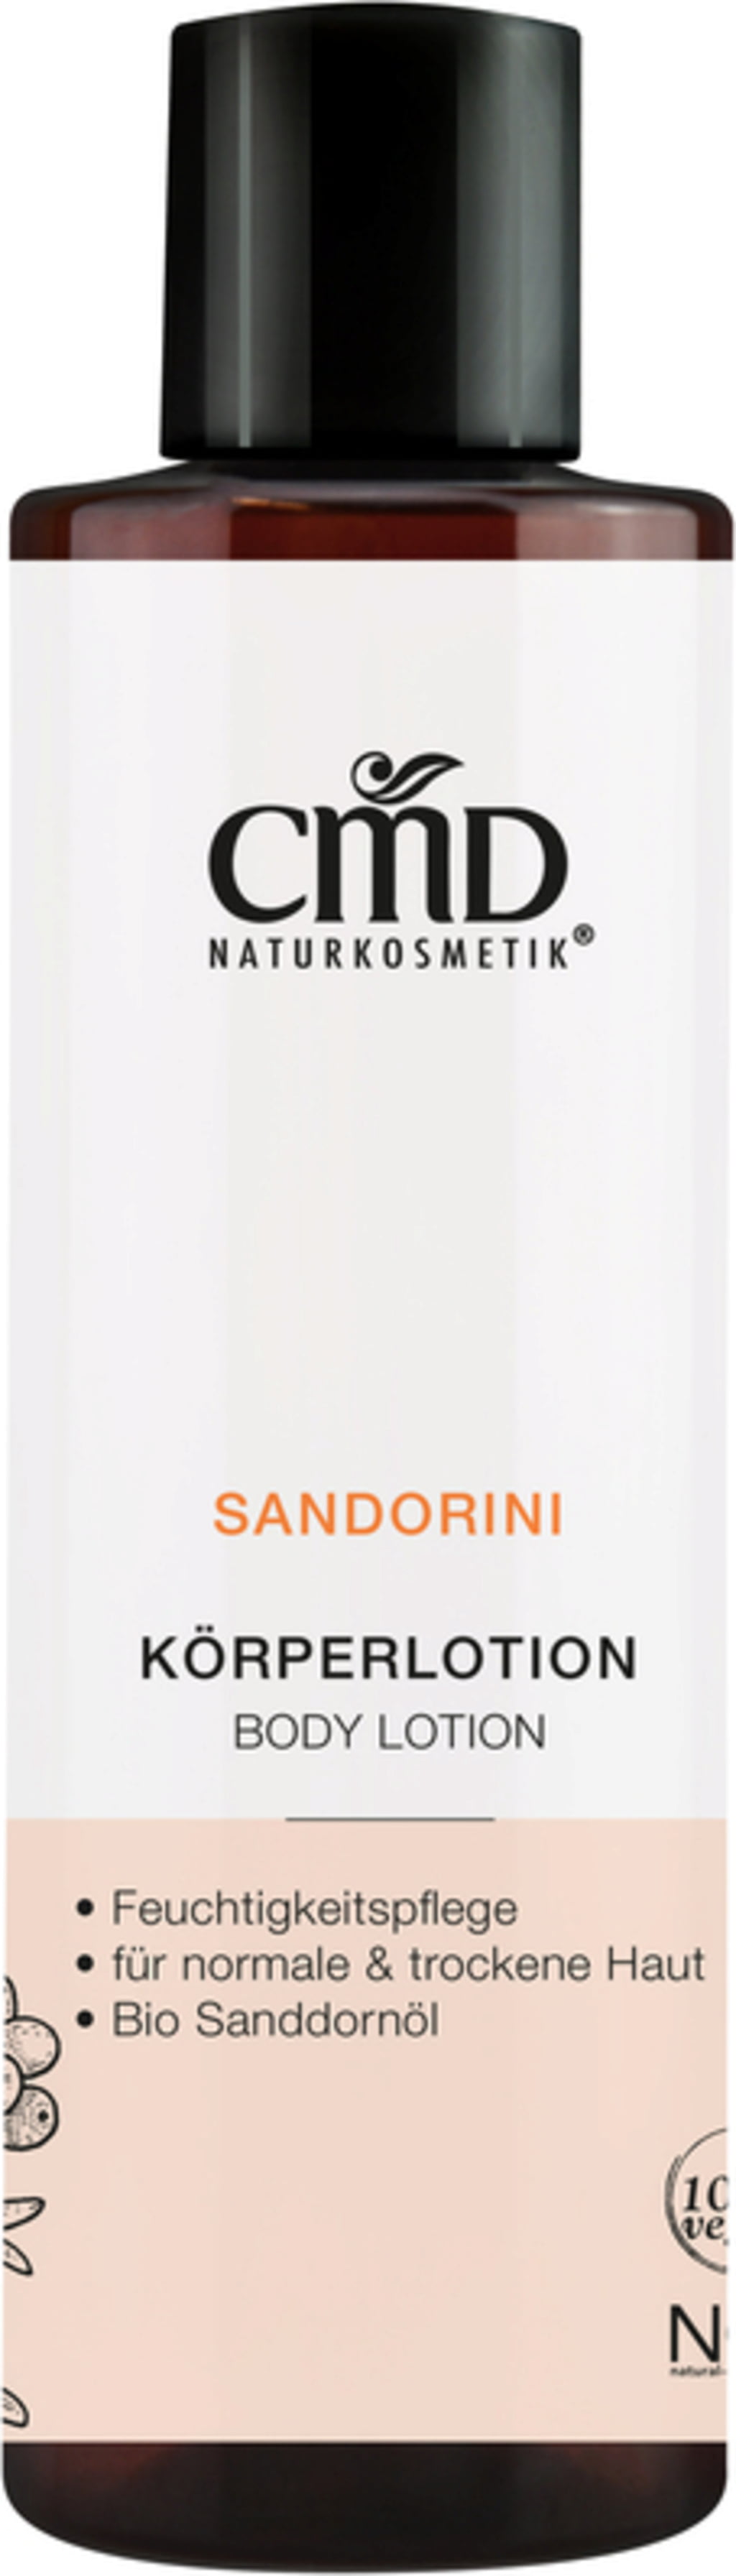 CMD Naturkosmetik Sandorini Körperlotion - 200 ml